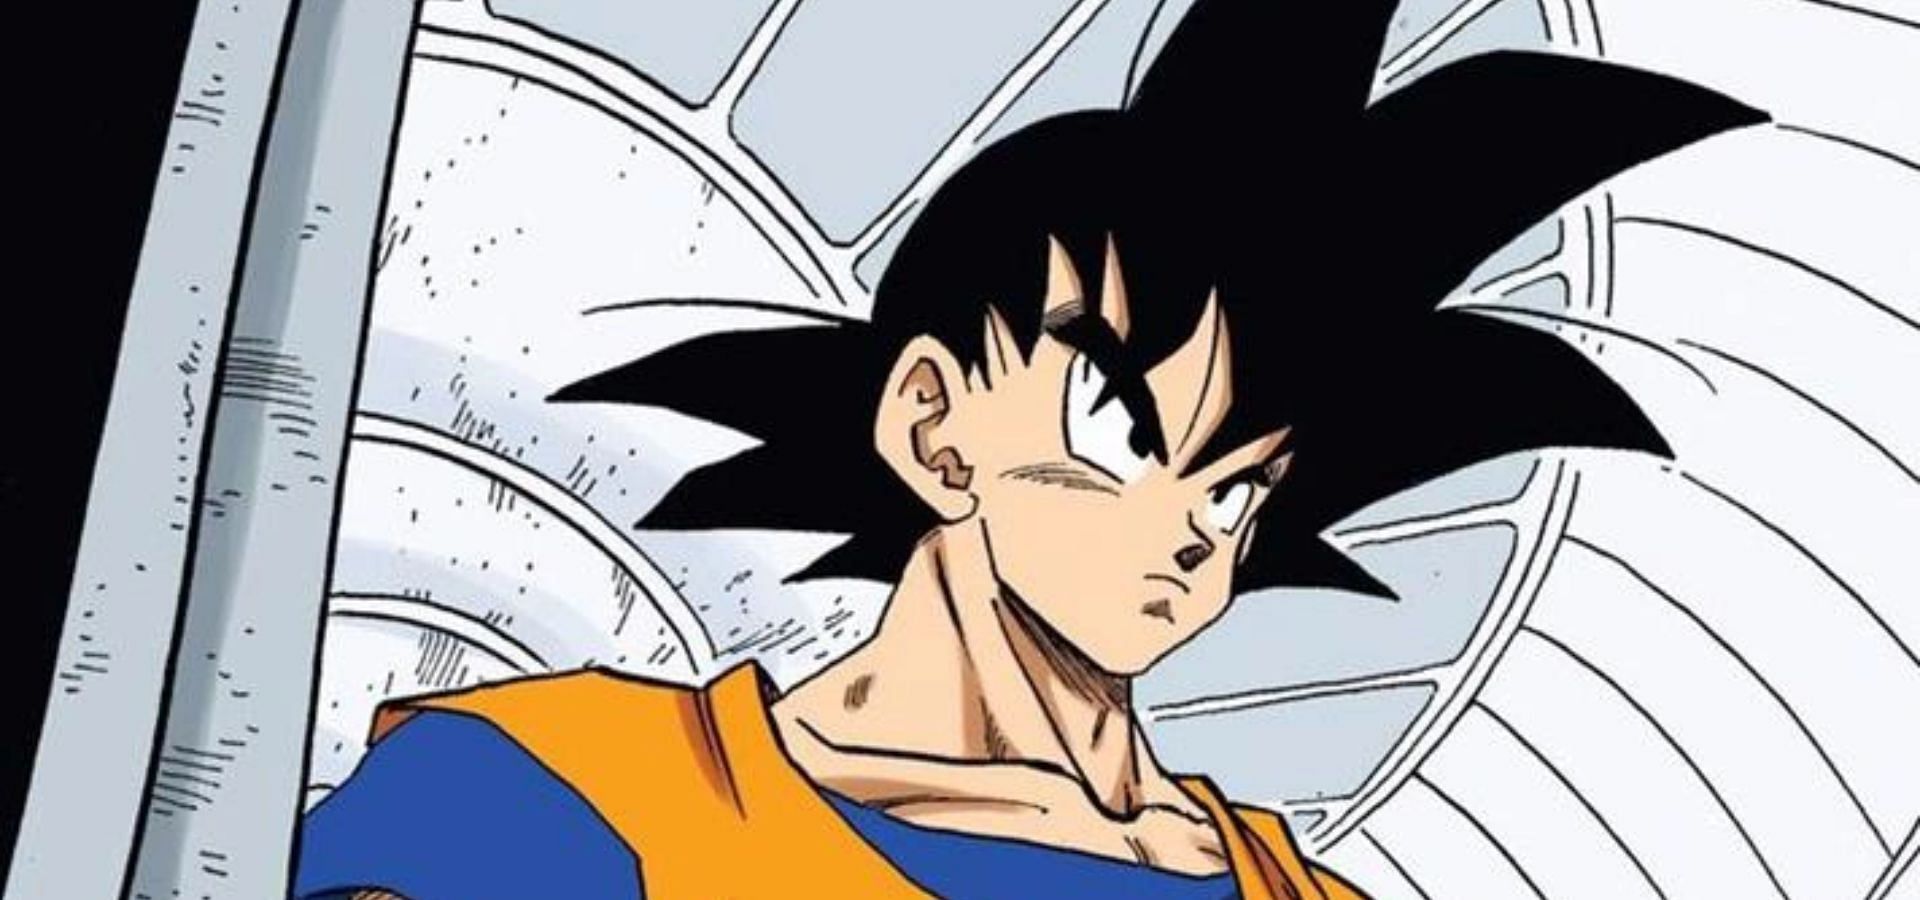 Son Goku from Dragon Ball Z (image via Toei Animation)